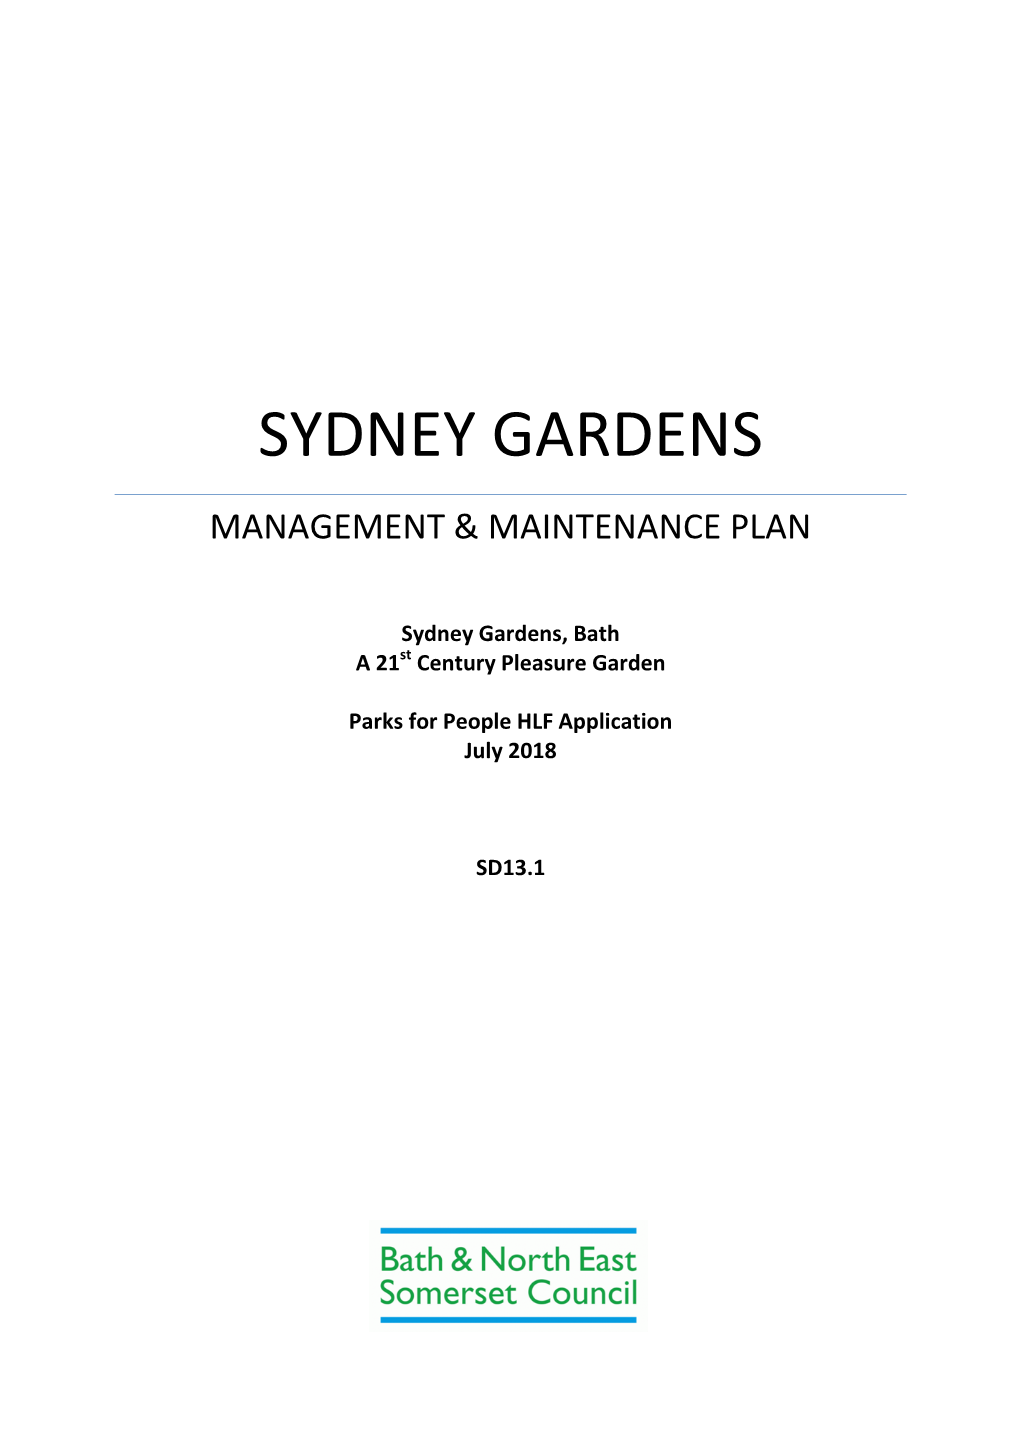 Sydney Gardens Management & Maintenance Plan